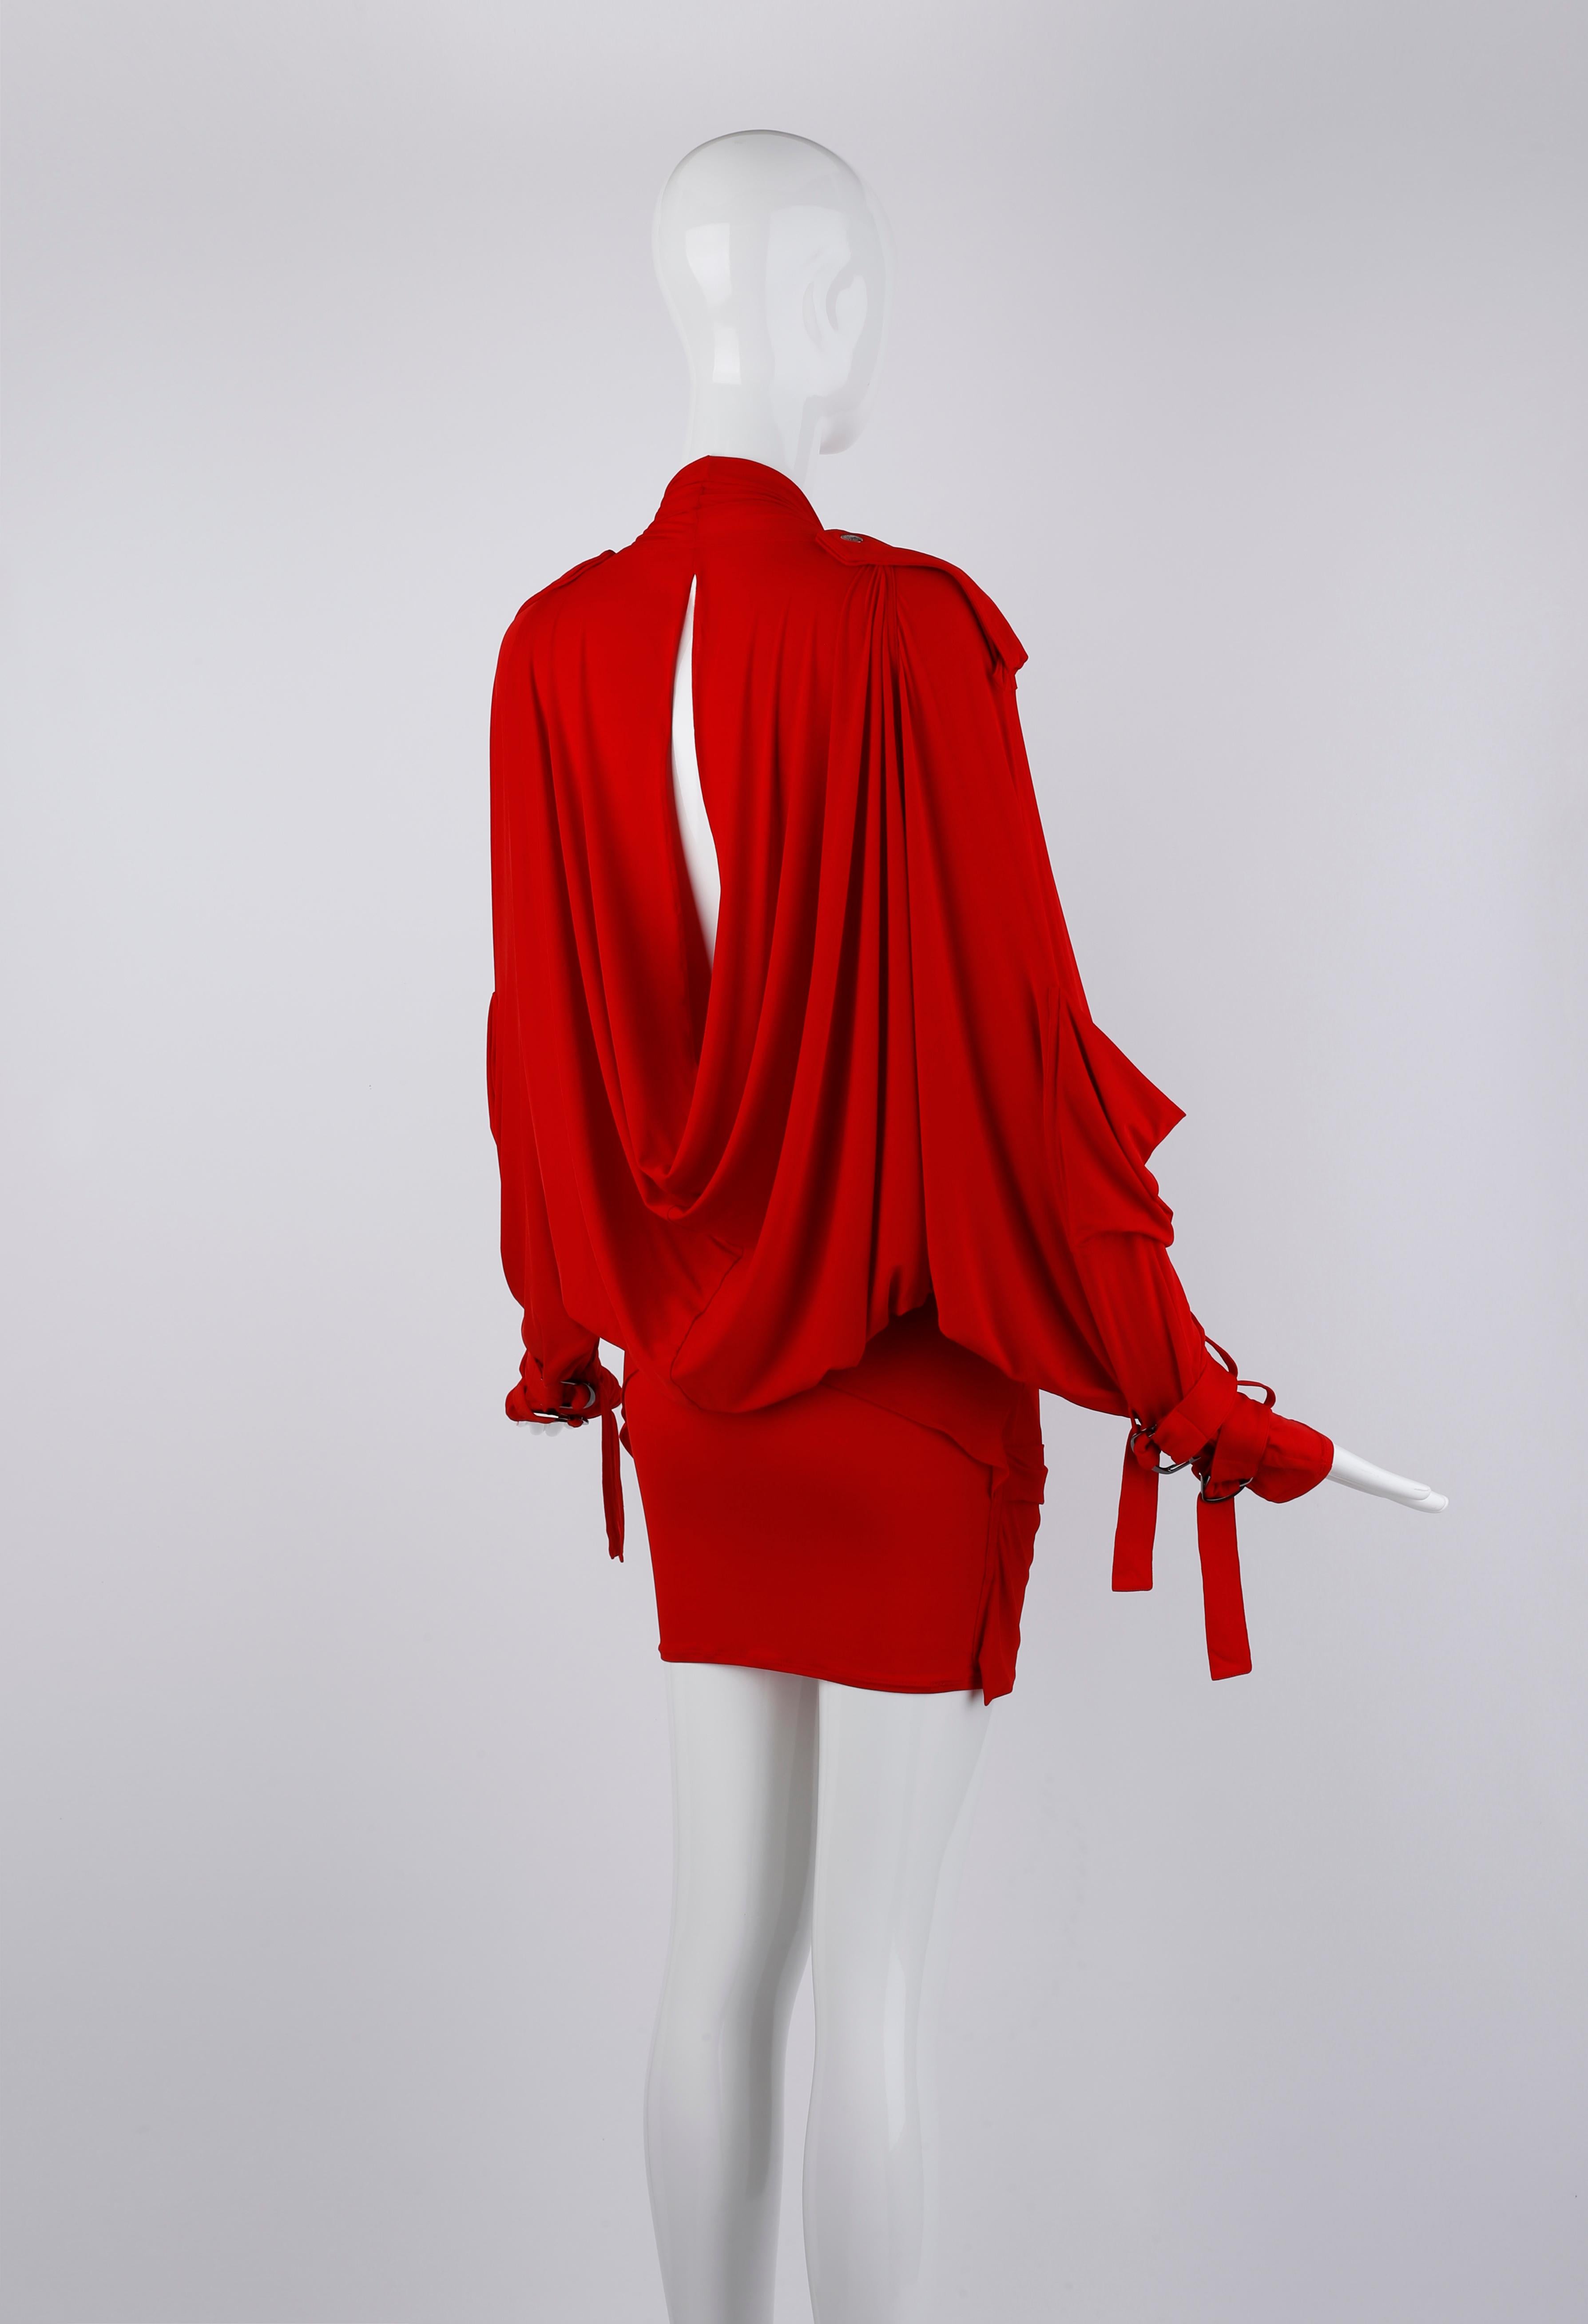 Women's Christian Dior John Galliano S/S 2003 Red Plunge Draped Pocket Mini Dress For Sale